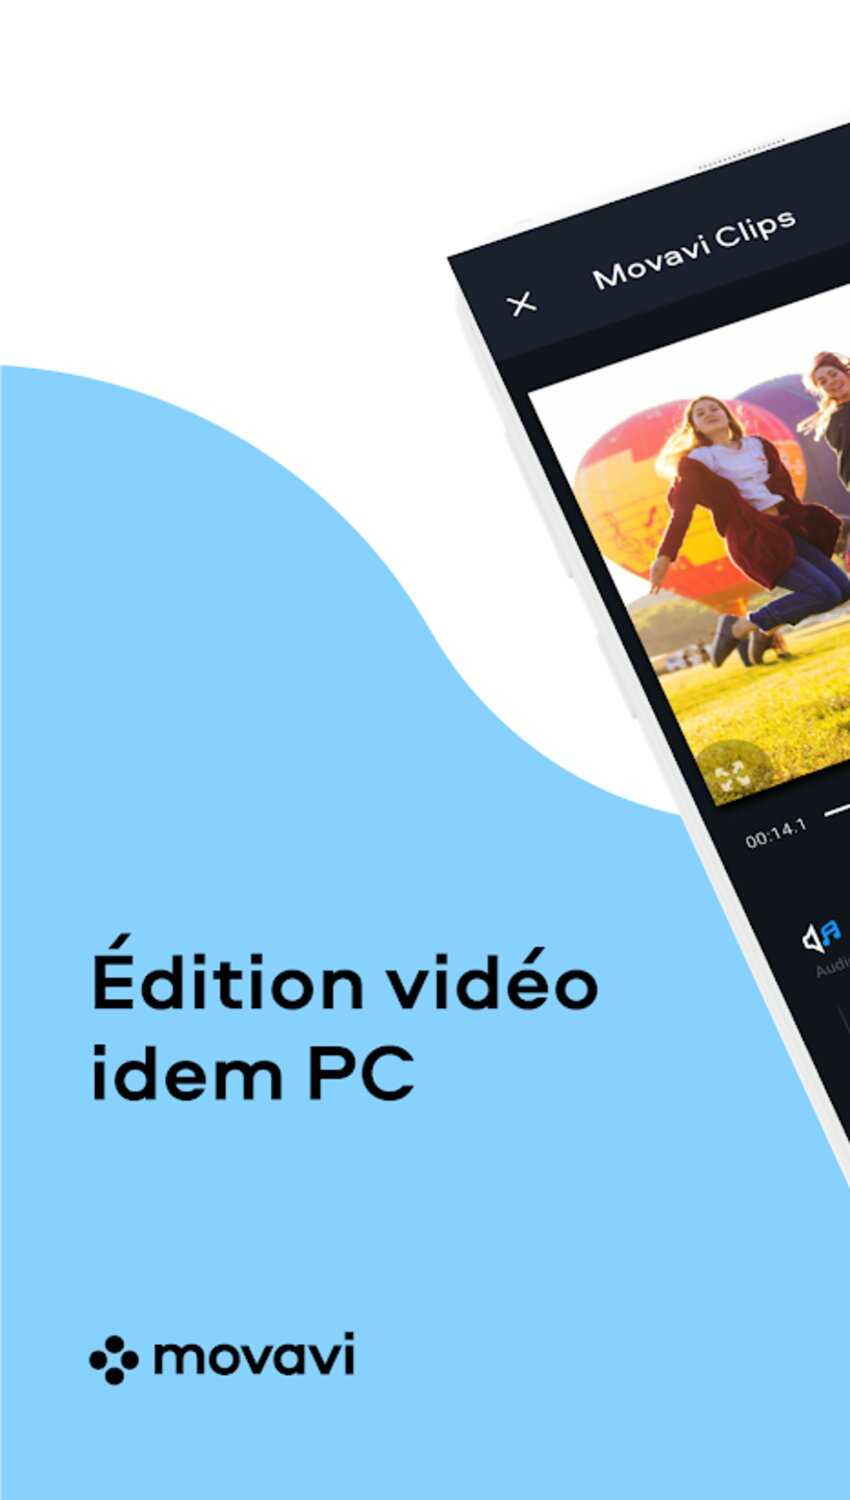 Video Editor Movavi Clips – Video Editor with Slideshows v4.17.0 (Premium) (Mod) APK